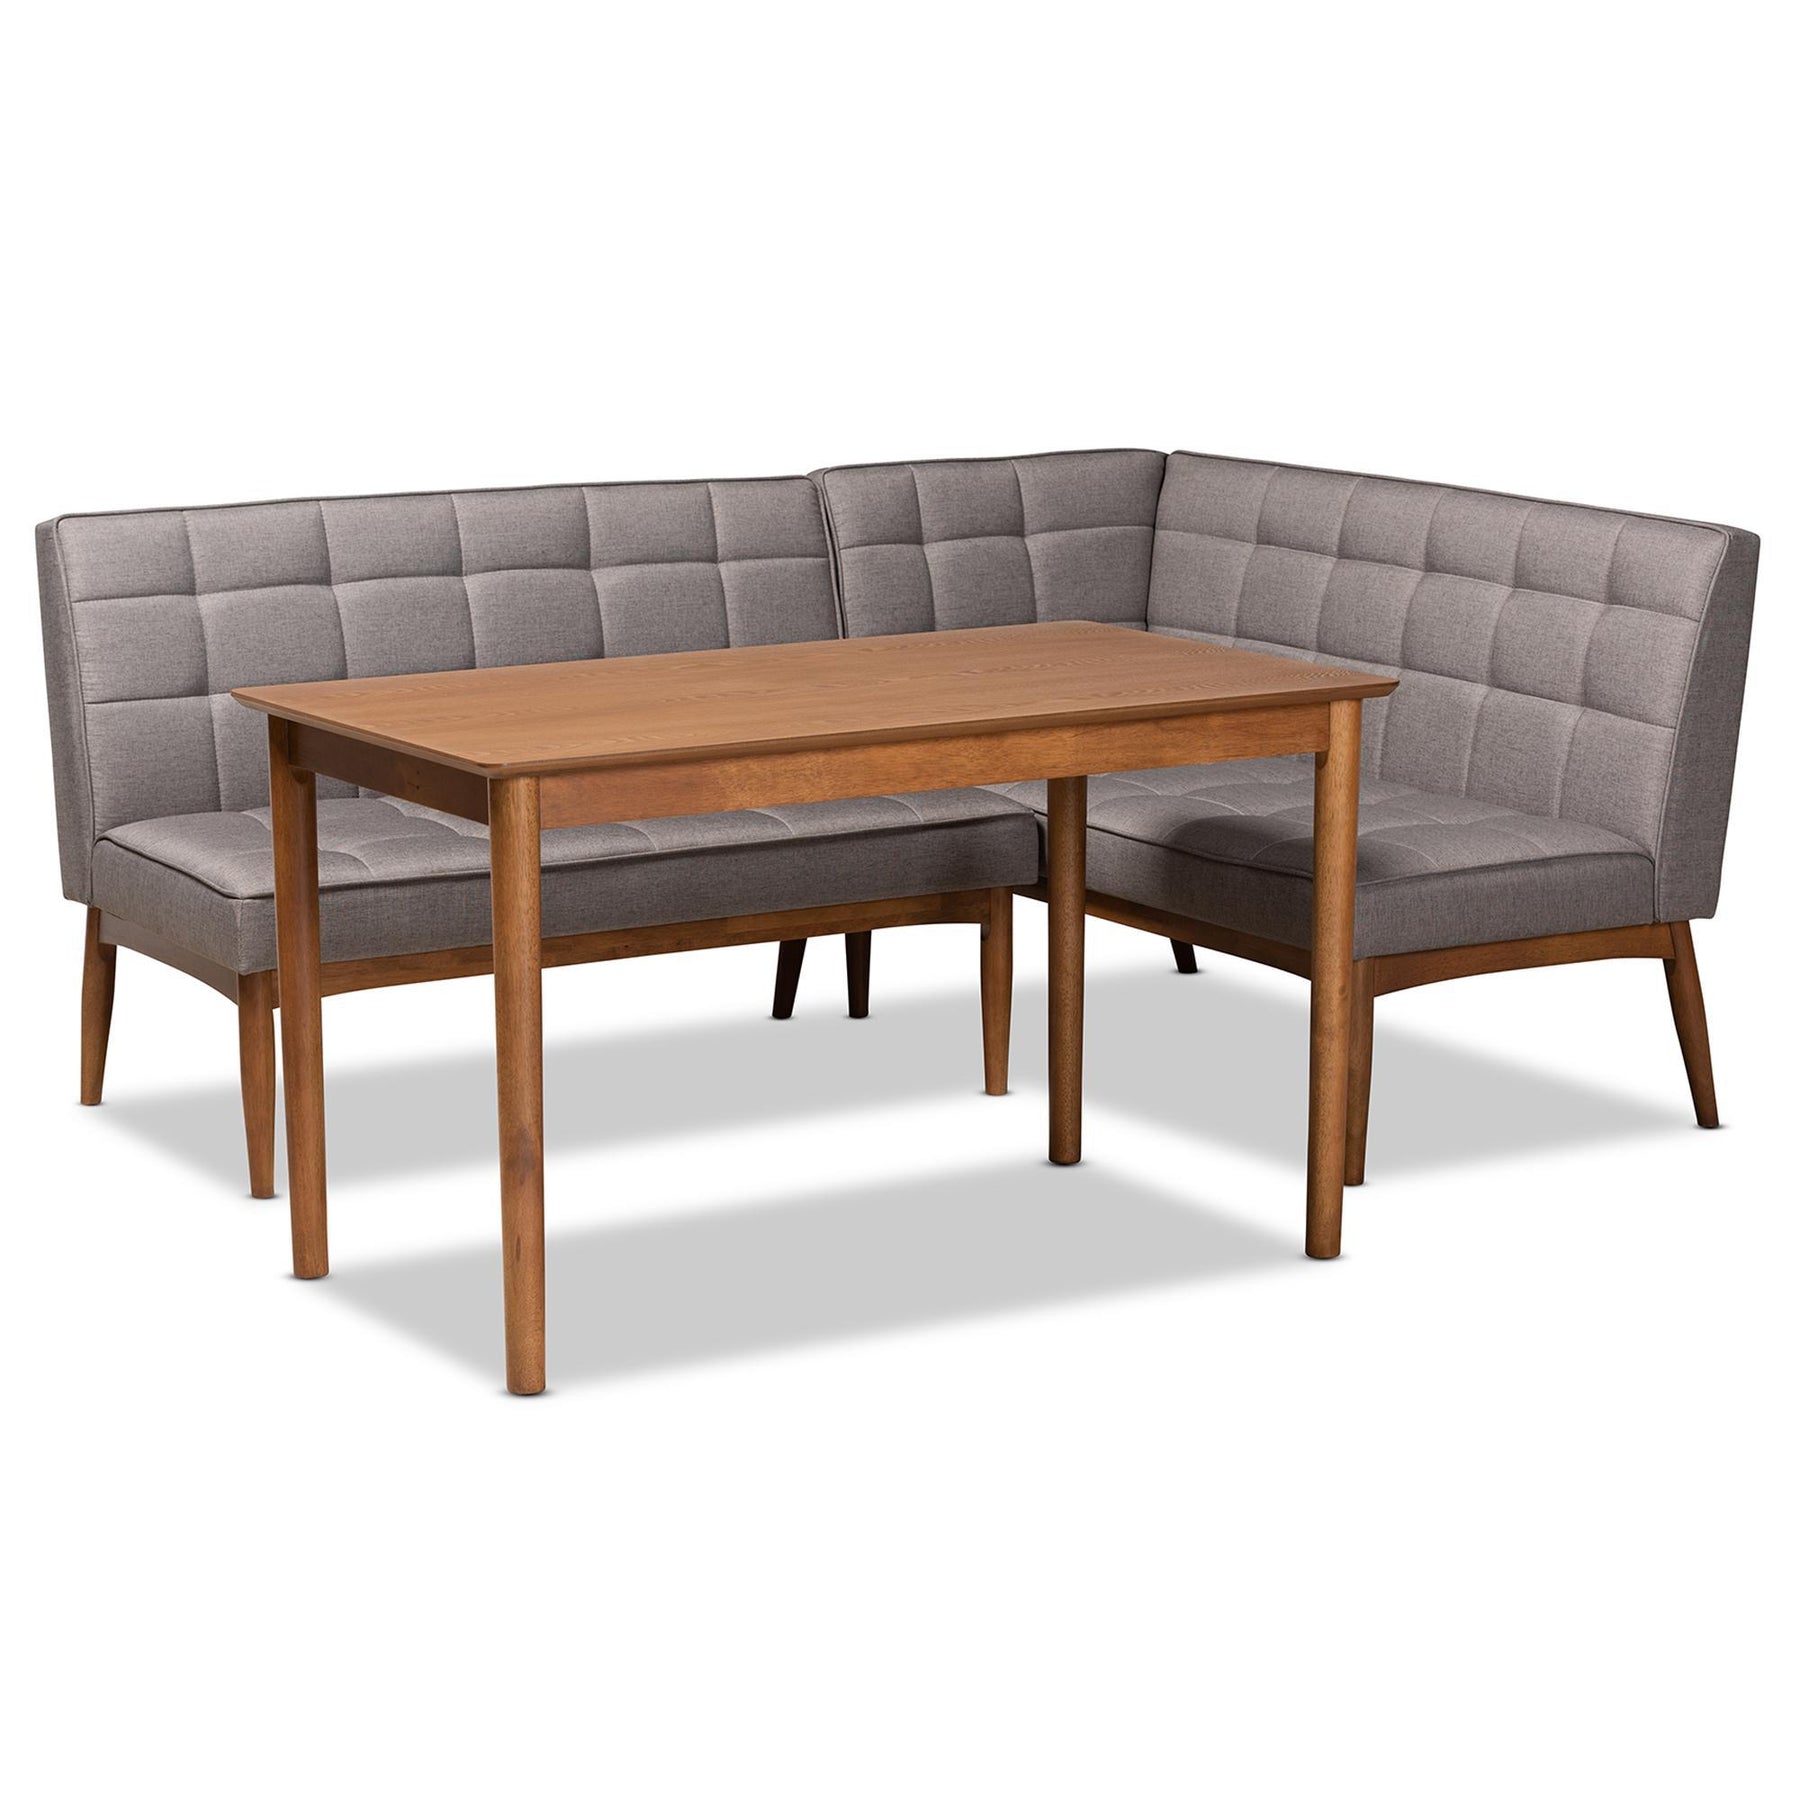 Baxton Studio Sanford Mid-Century Modern Grey Fabric Upholstered And Walnut Brown Finished Wood 3-Piece Dining Nook Set - BBT8051.11-Grey/Walnut-3PC Dining Nook Set